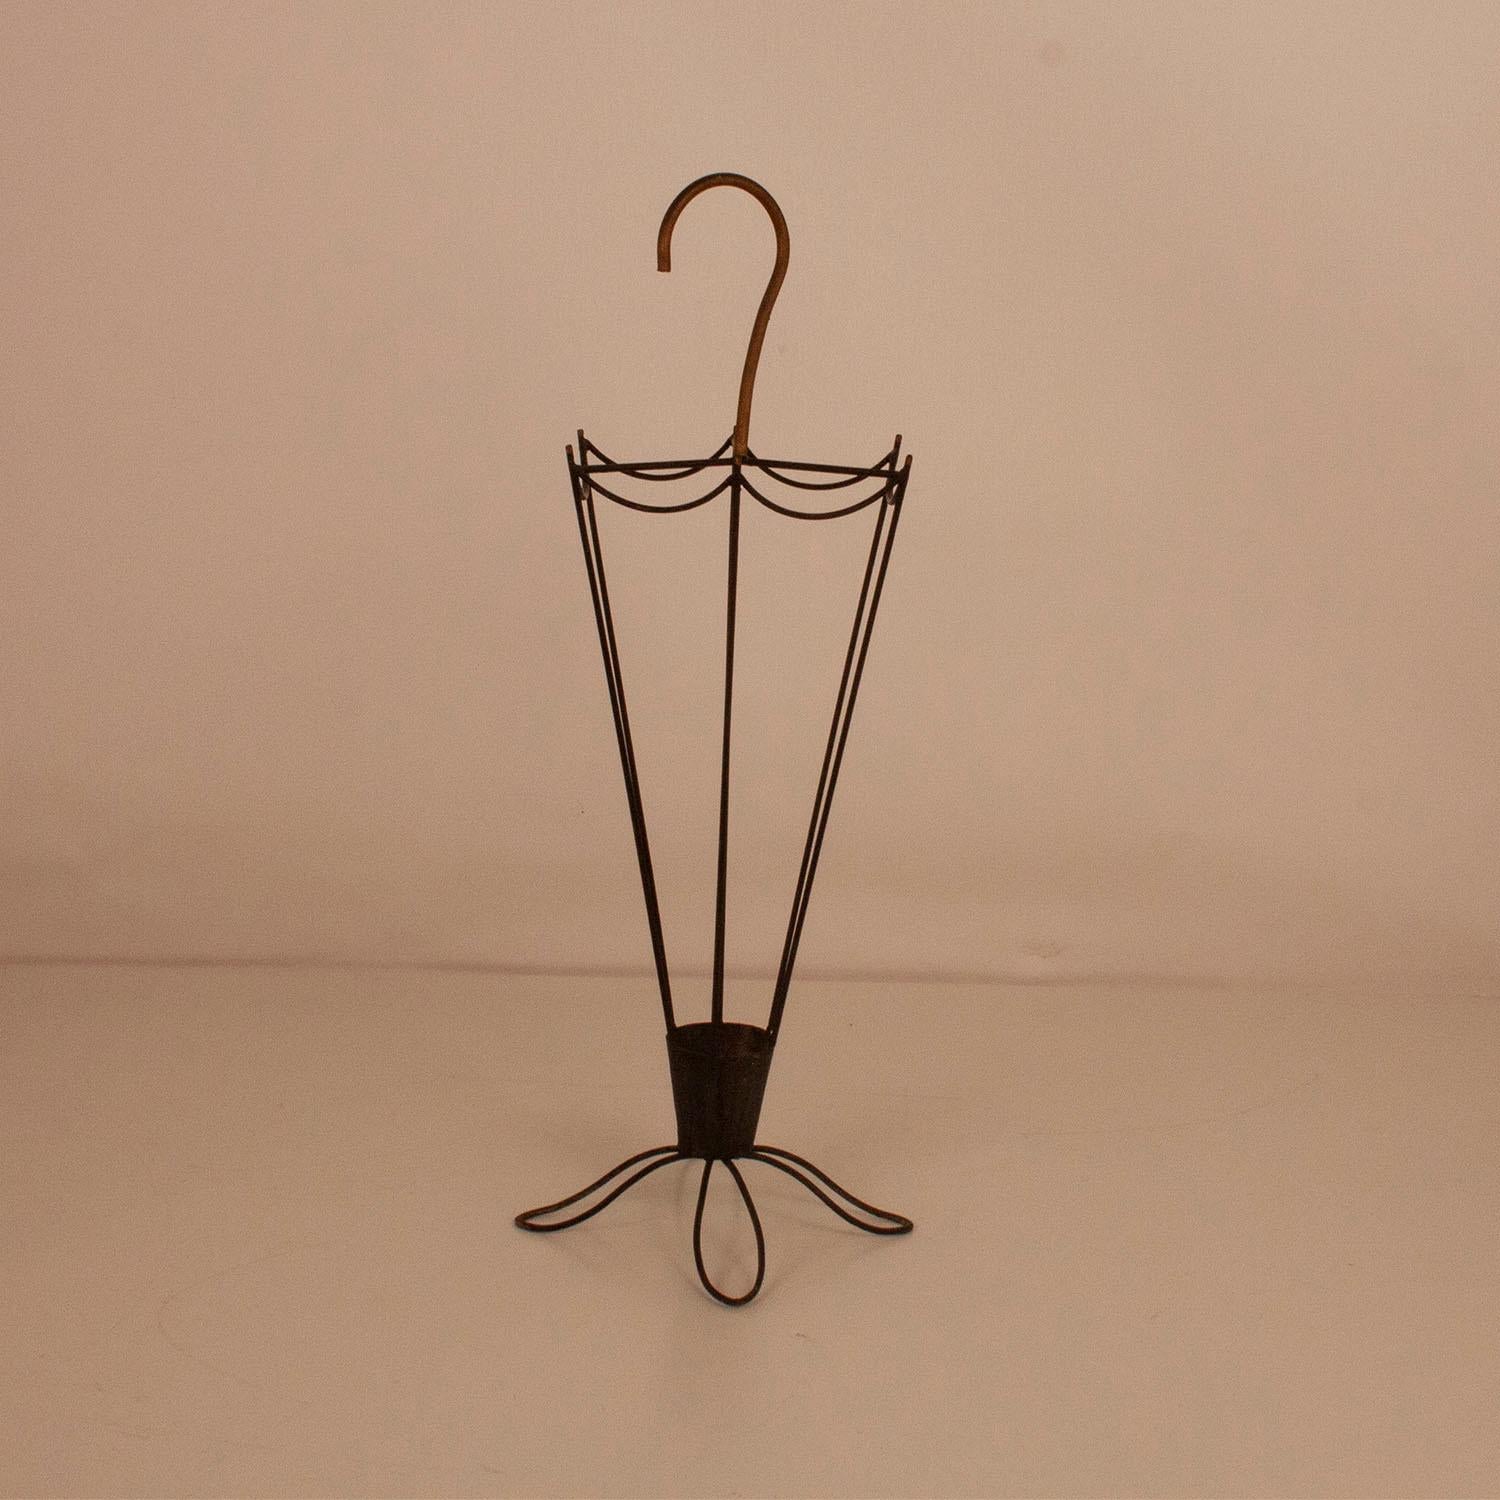 Spanish iron umbrella stand, the handle is golden.
Umbrella shape.